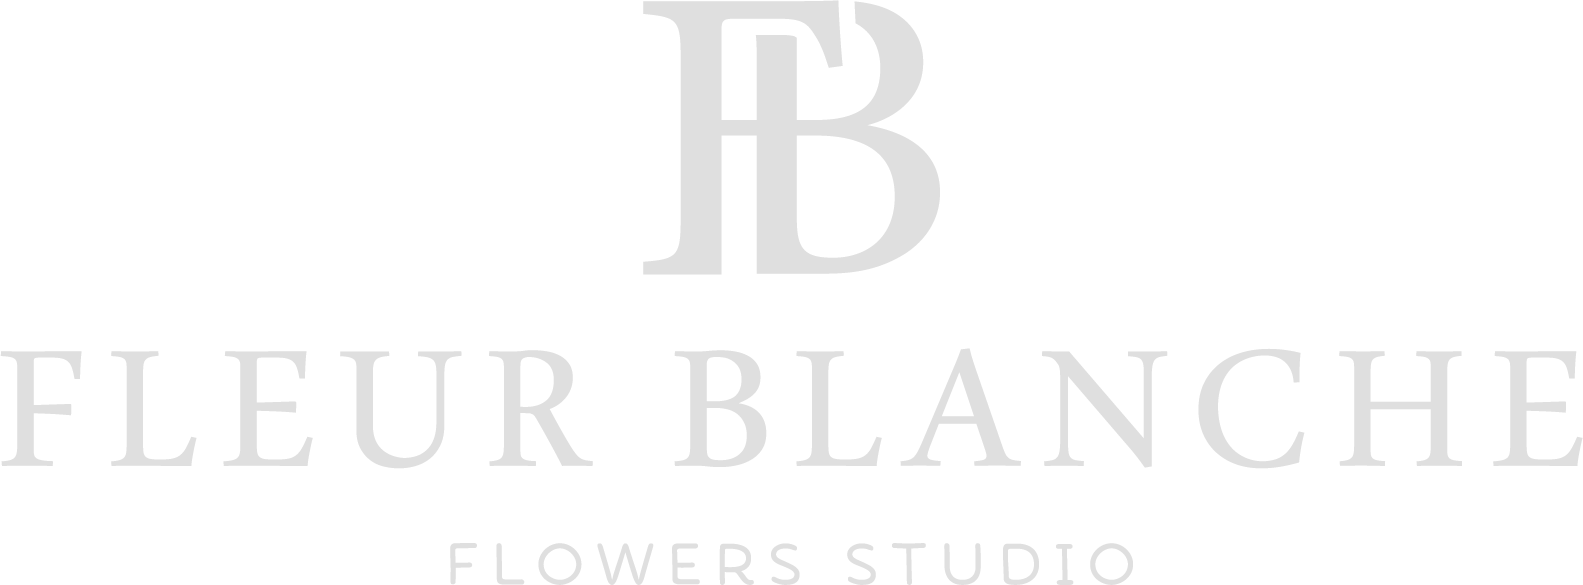 Flowers studio – FLEUR BLANCHE